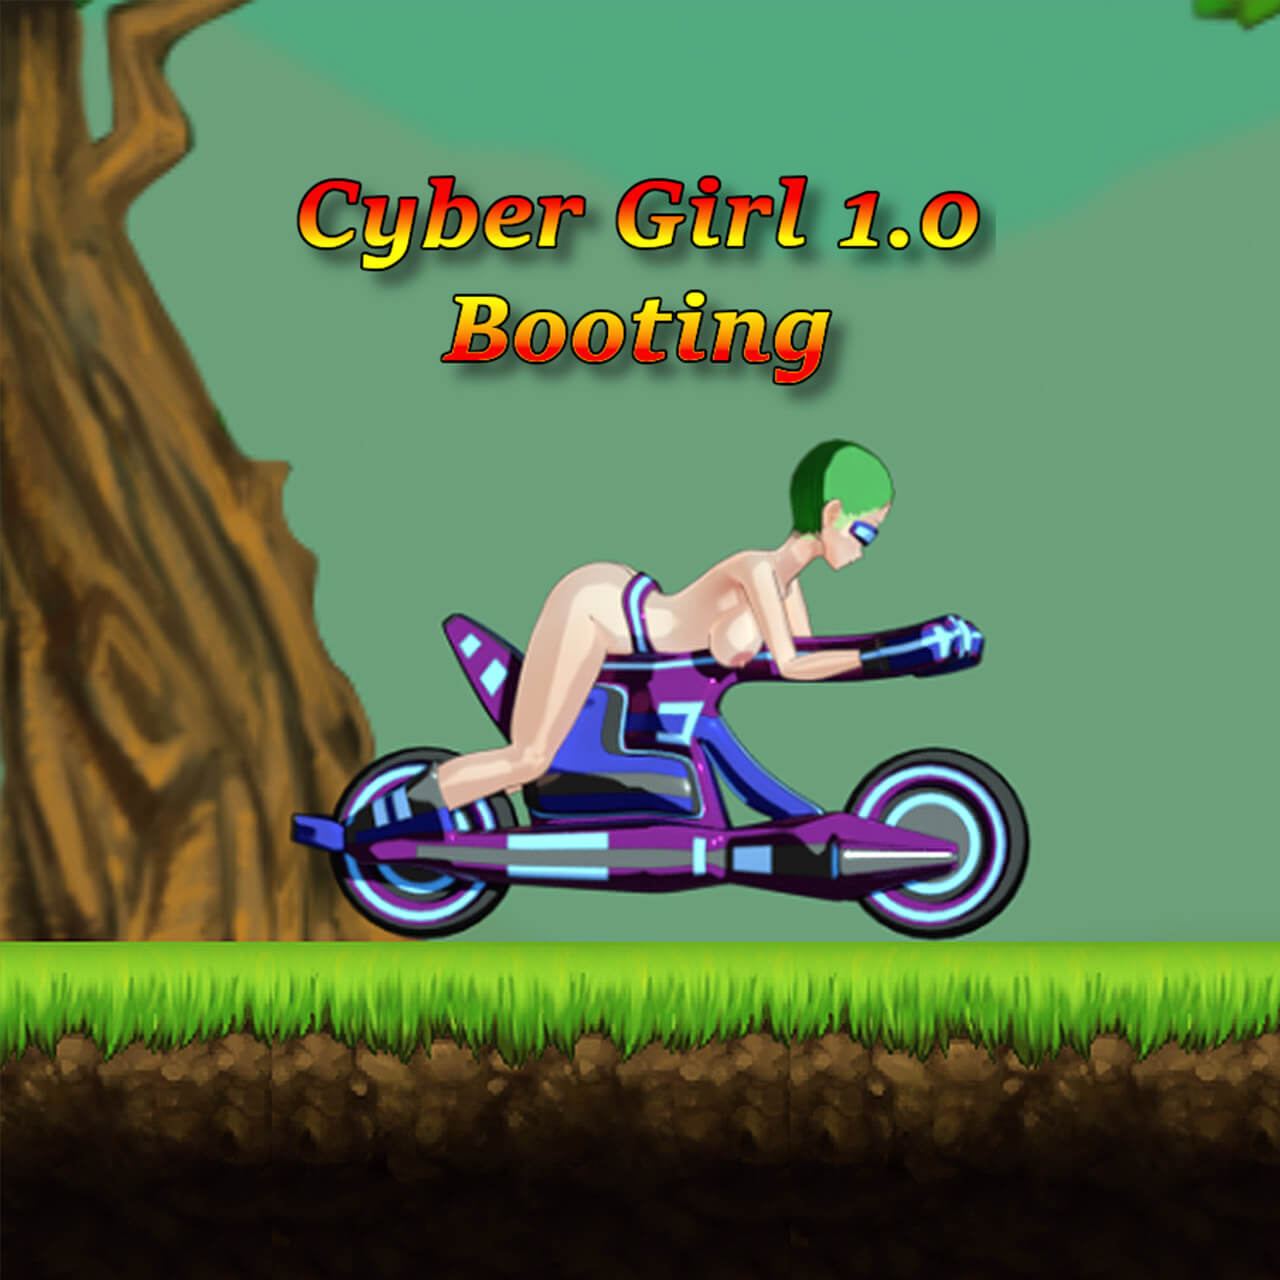 Xxx Online Cyber Me - Cyber Girl 1.0: Booting - Action Adventure Sex Game | Nutaku